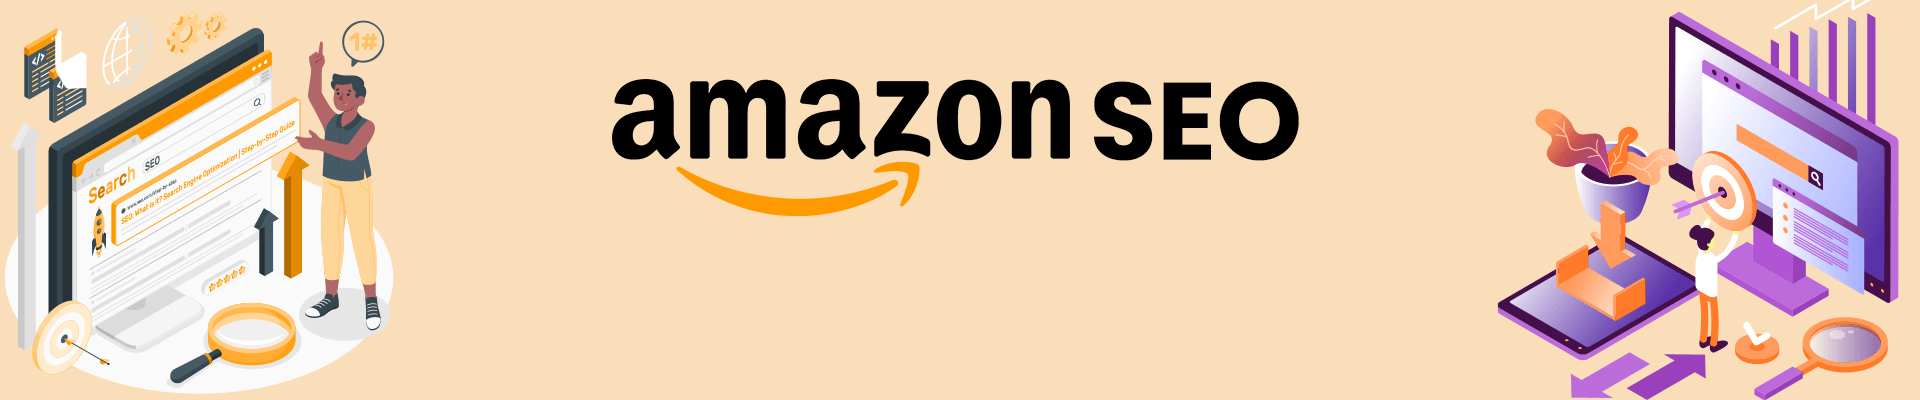 Amazon SEO Complete Guide To Rank On Amazon